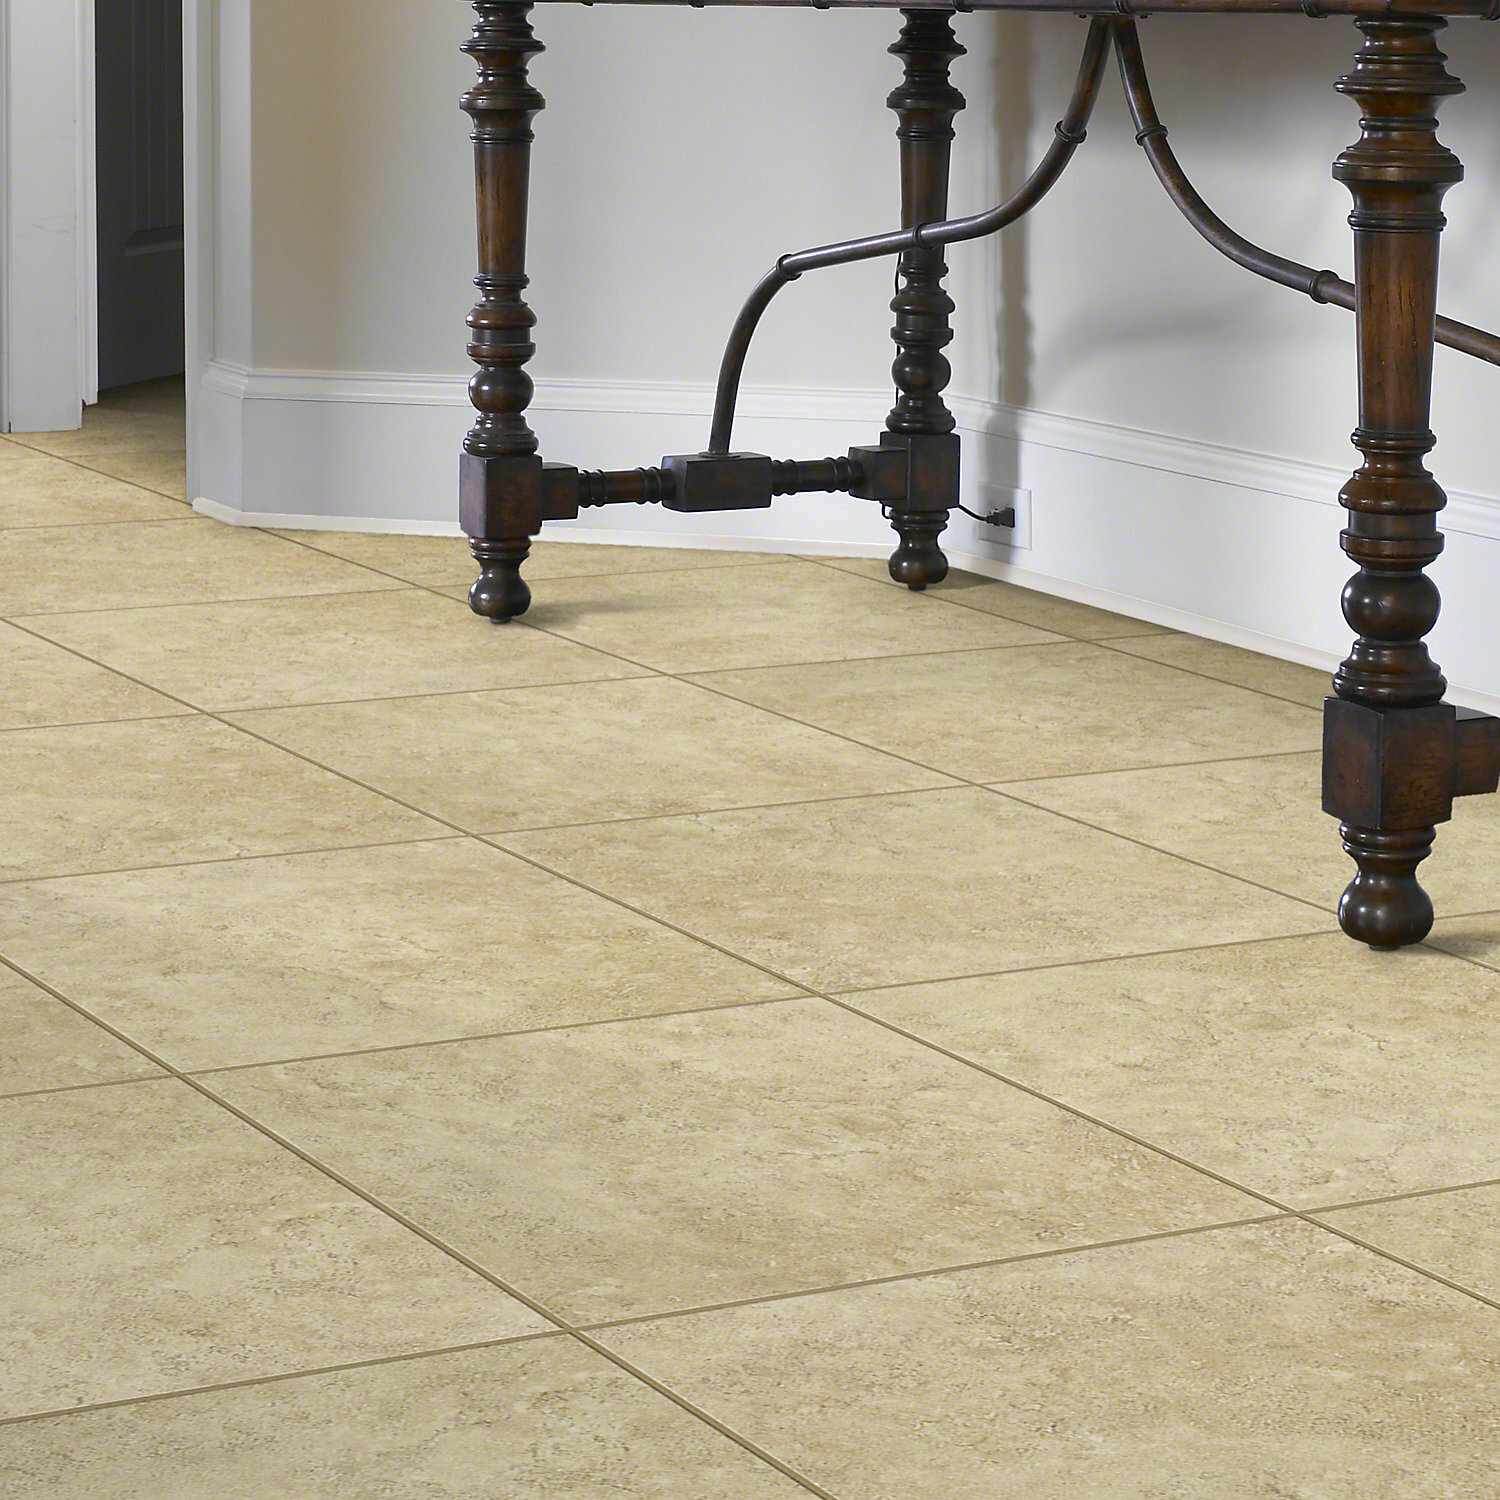 Shaw Floors Delight 17 X 17 Ceramic Field Tile Reviews Wayfair